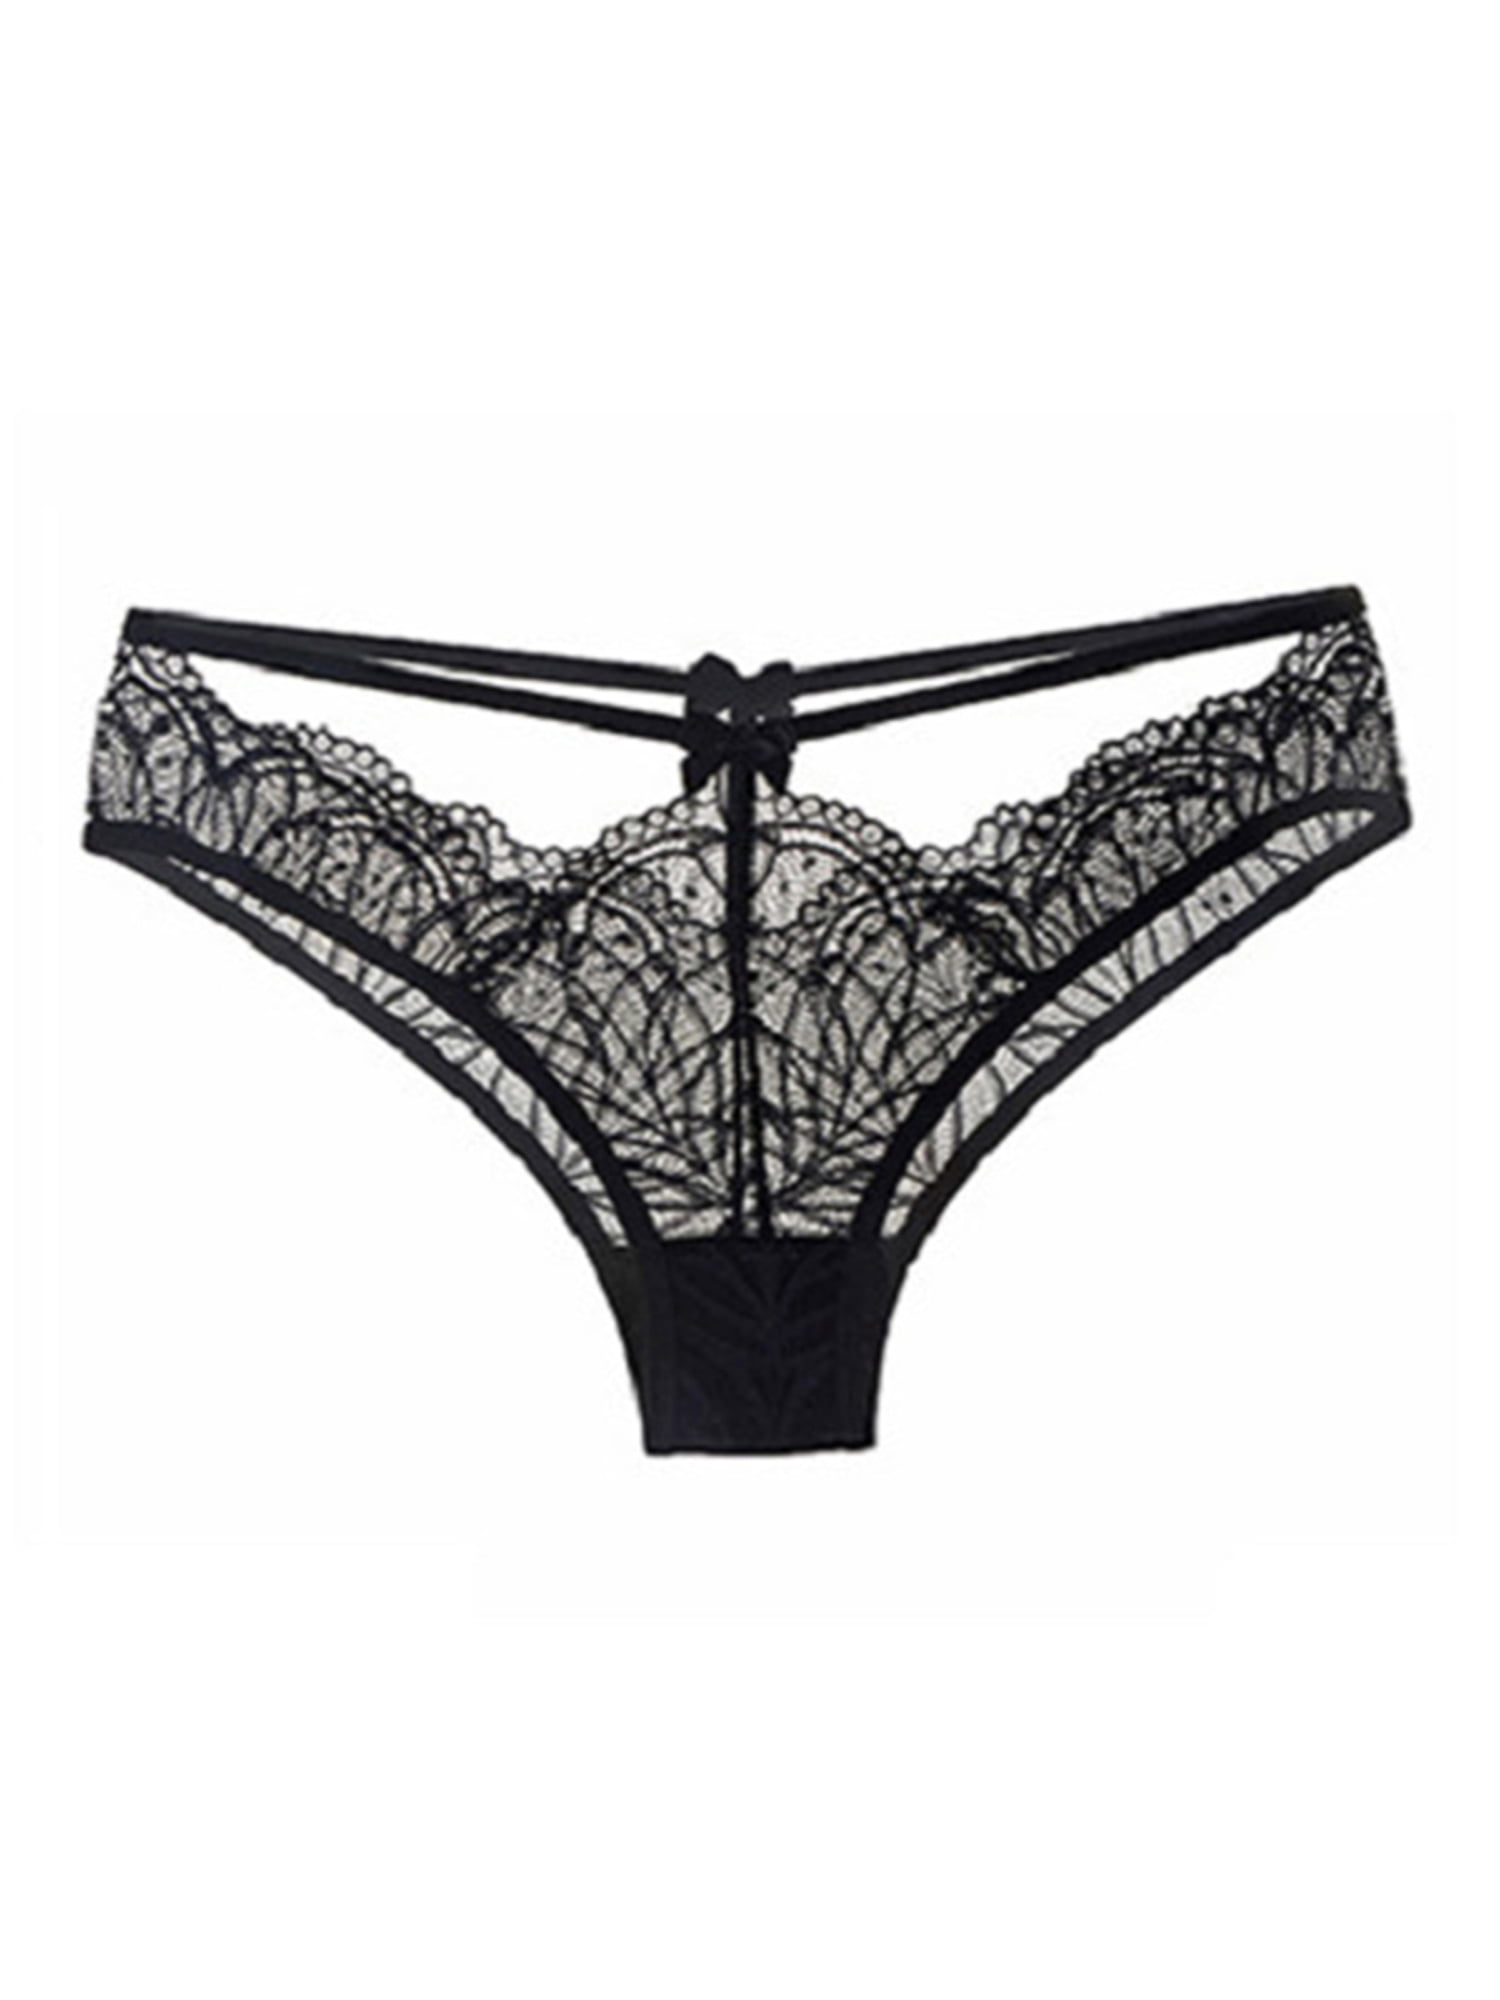 Eyicmarn Women Night Briefs, G-String Thongs Lace Underwear Panties ...